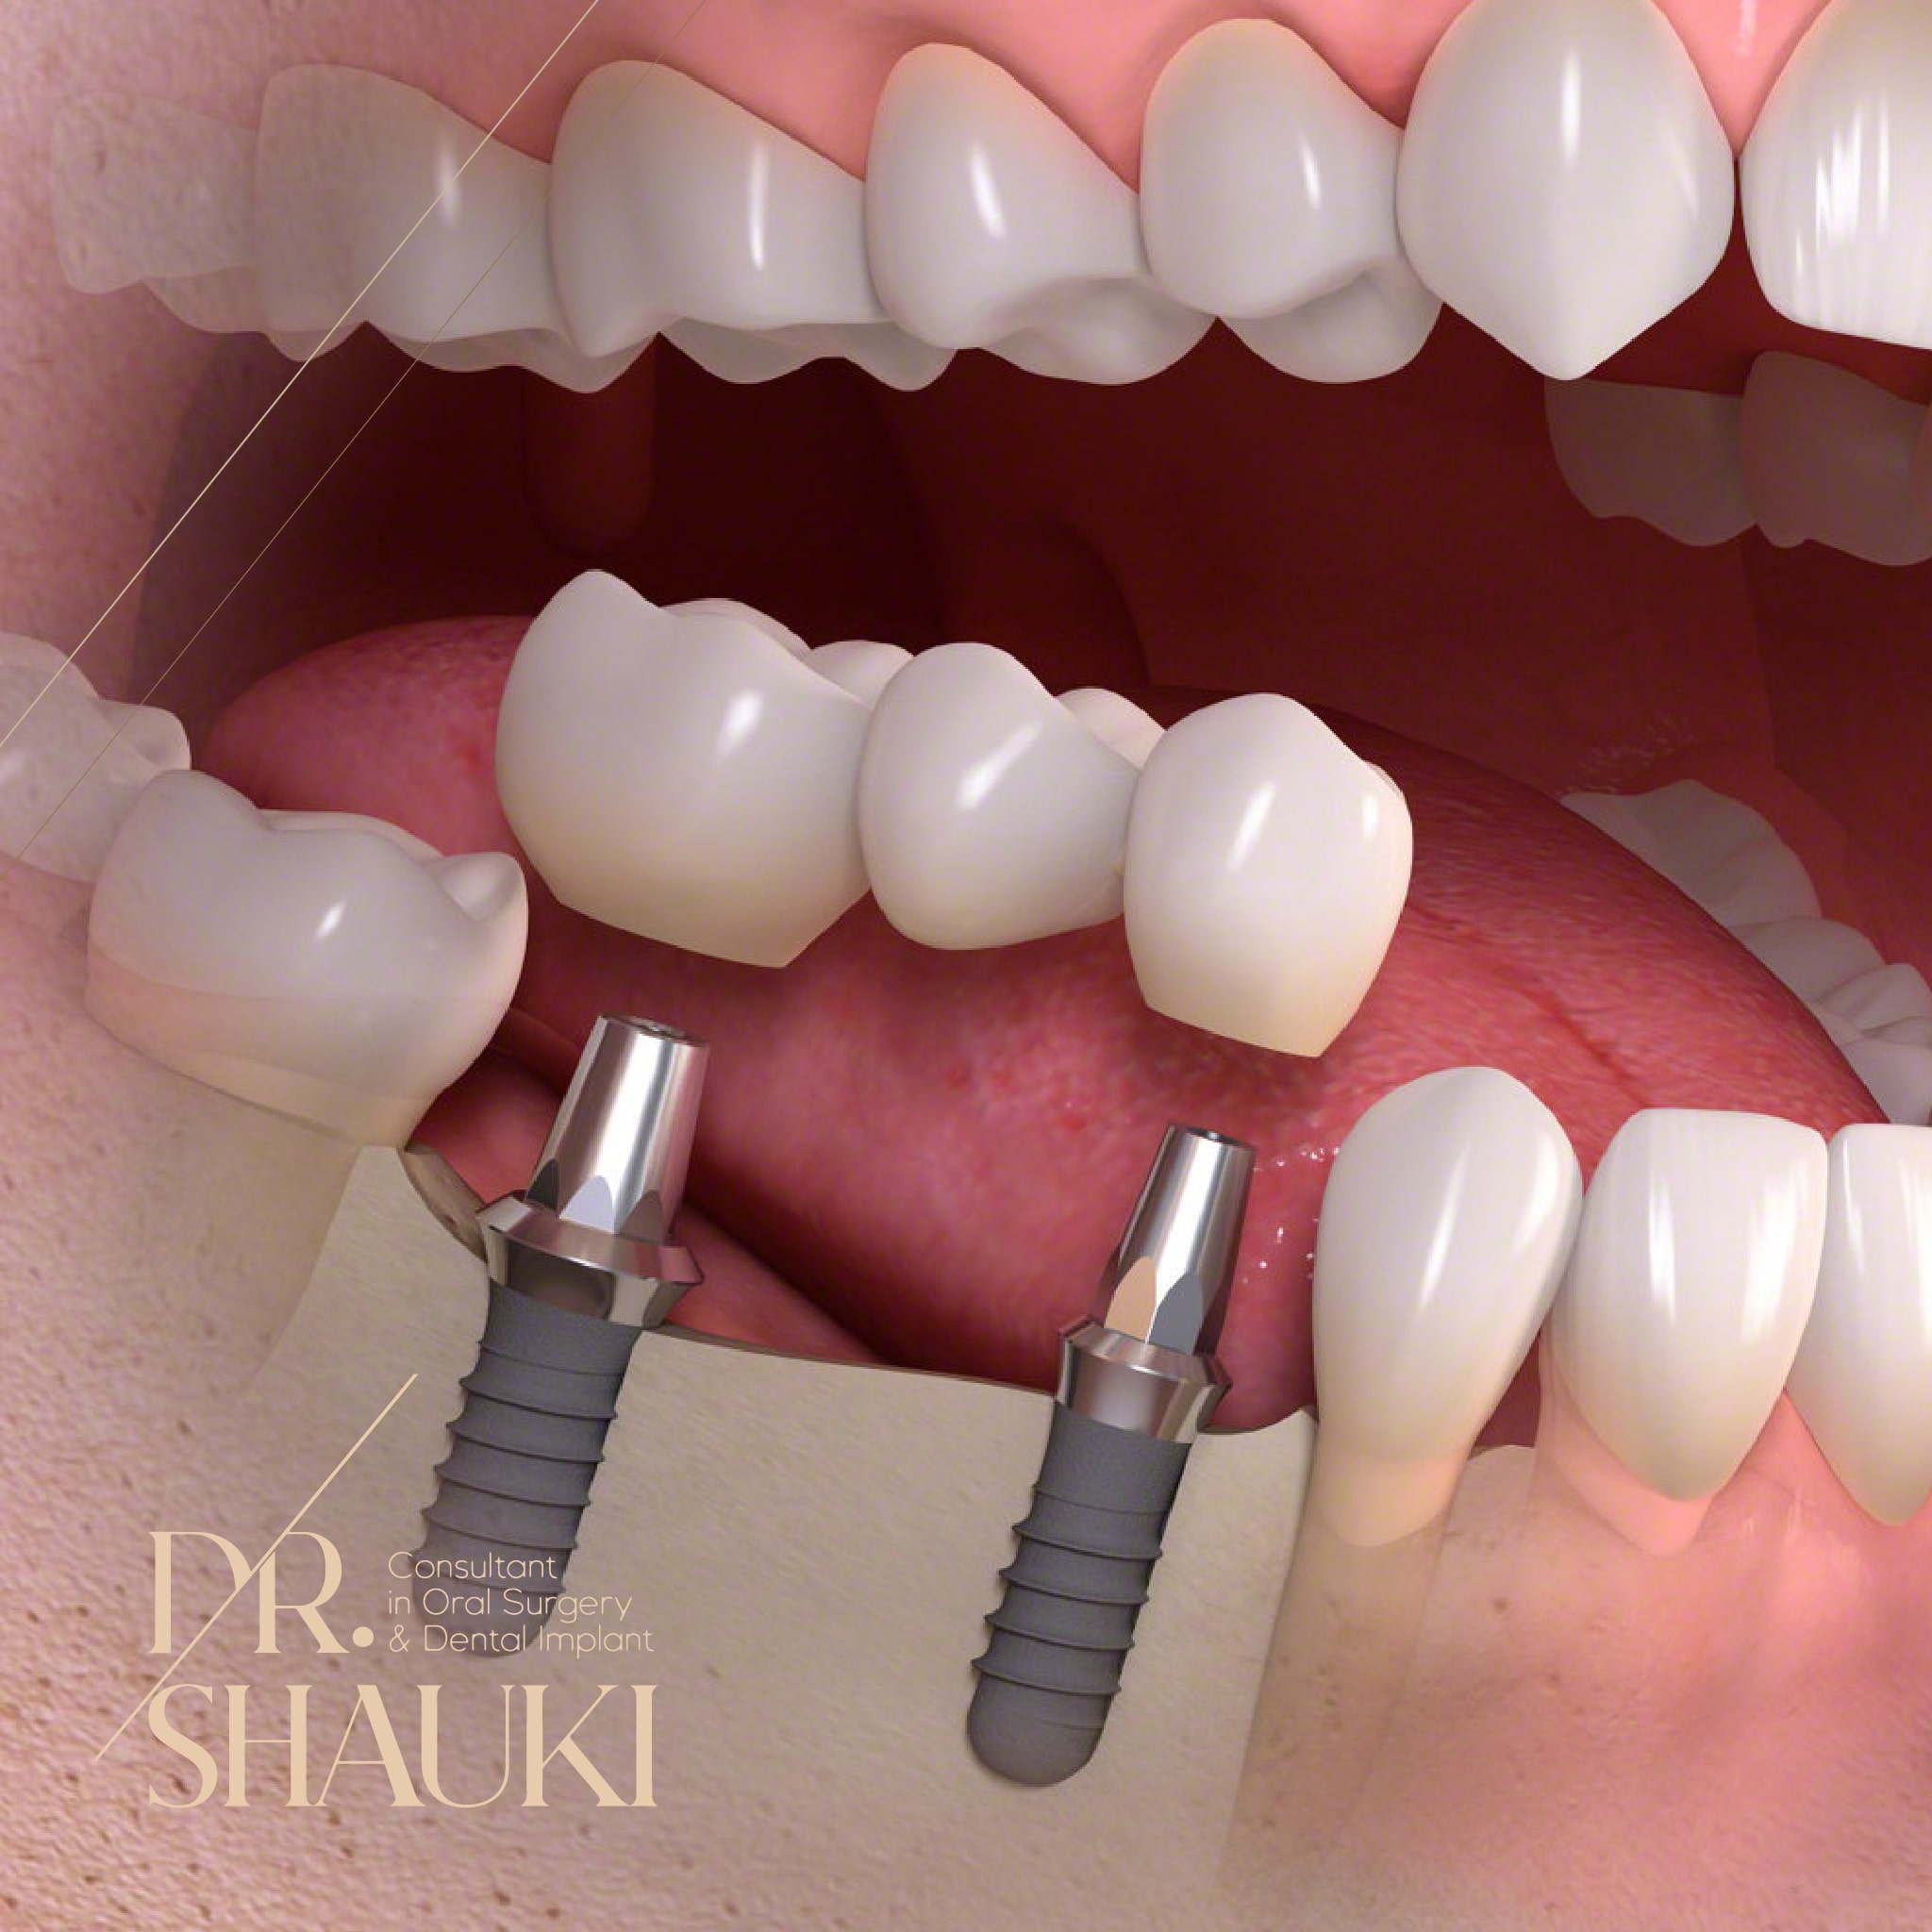 https://drshauki.com/wp-content/uploads/2021/10/Dr.-Shauki-Dental-Health-11.jpg